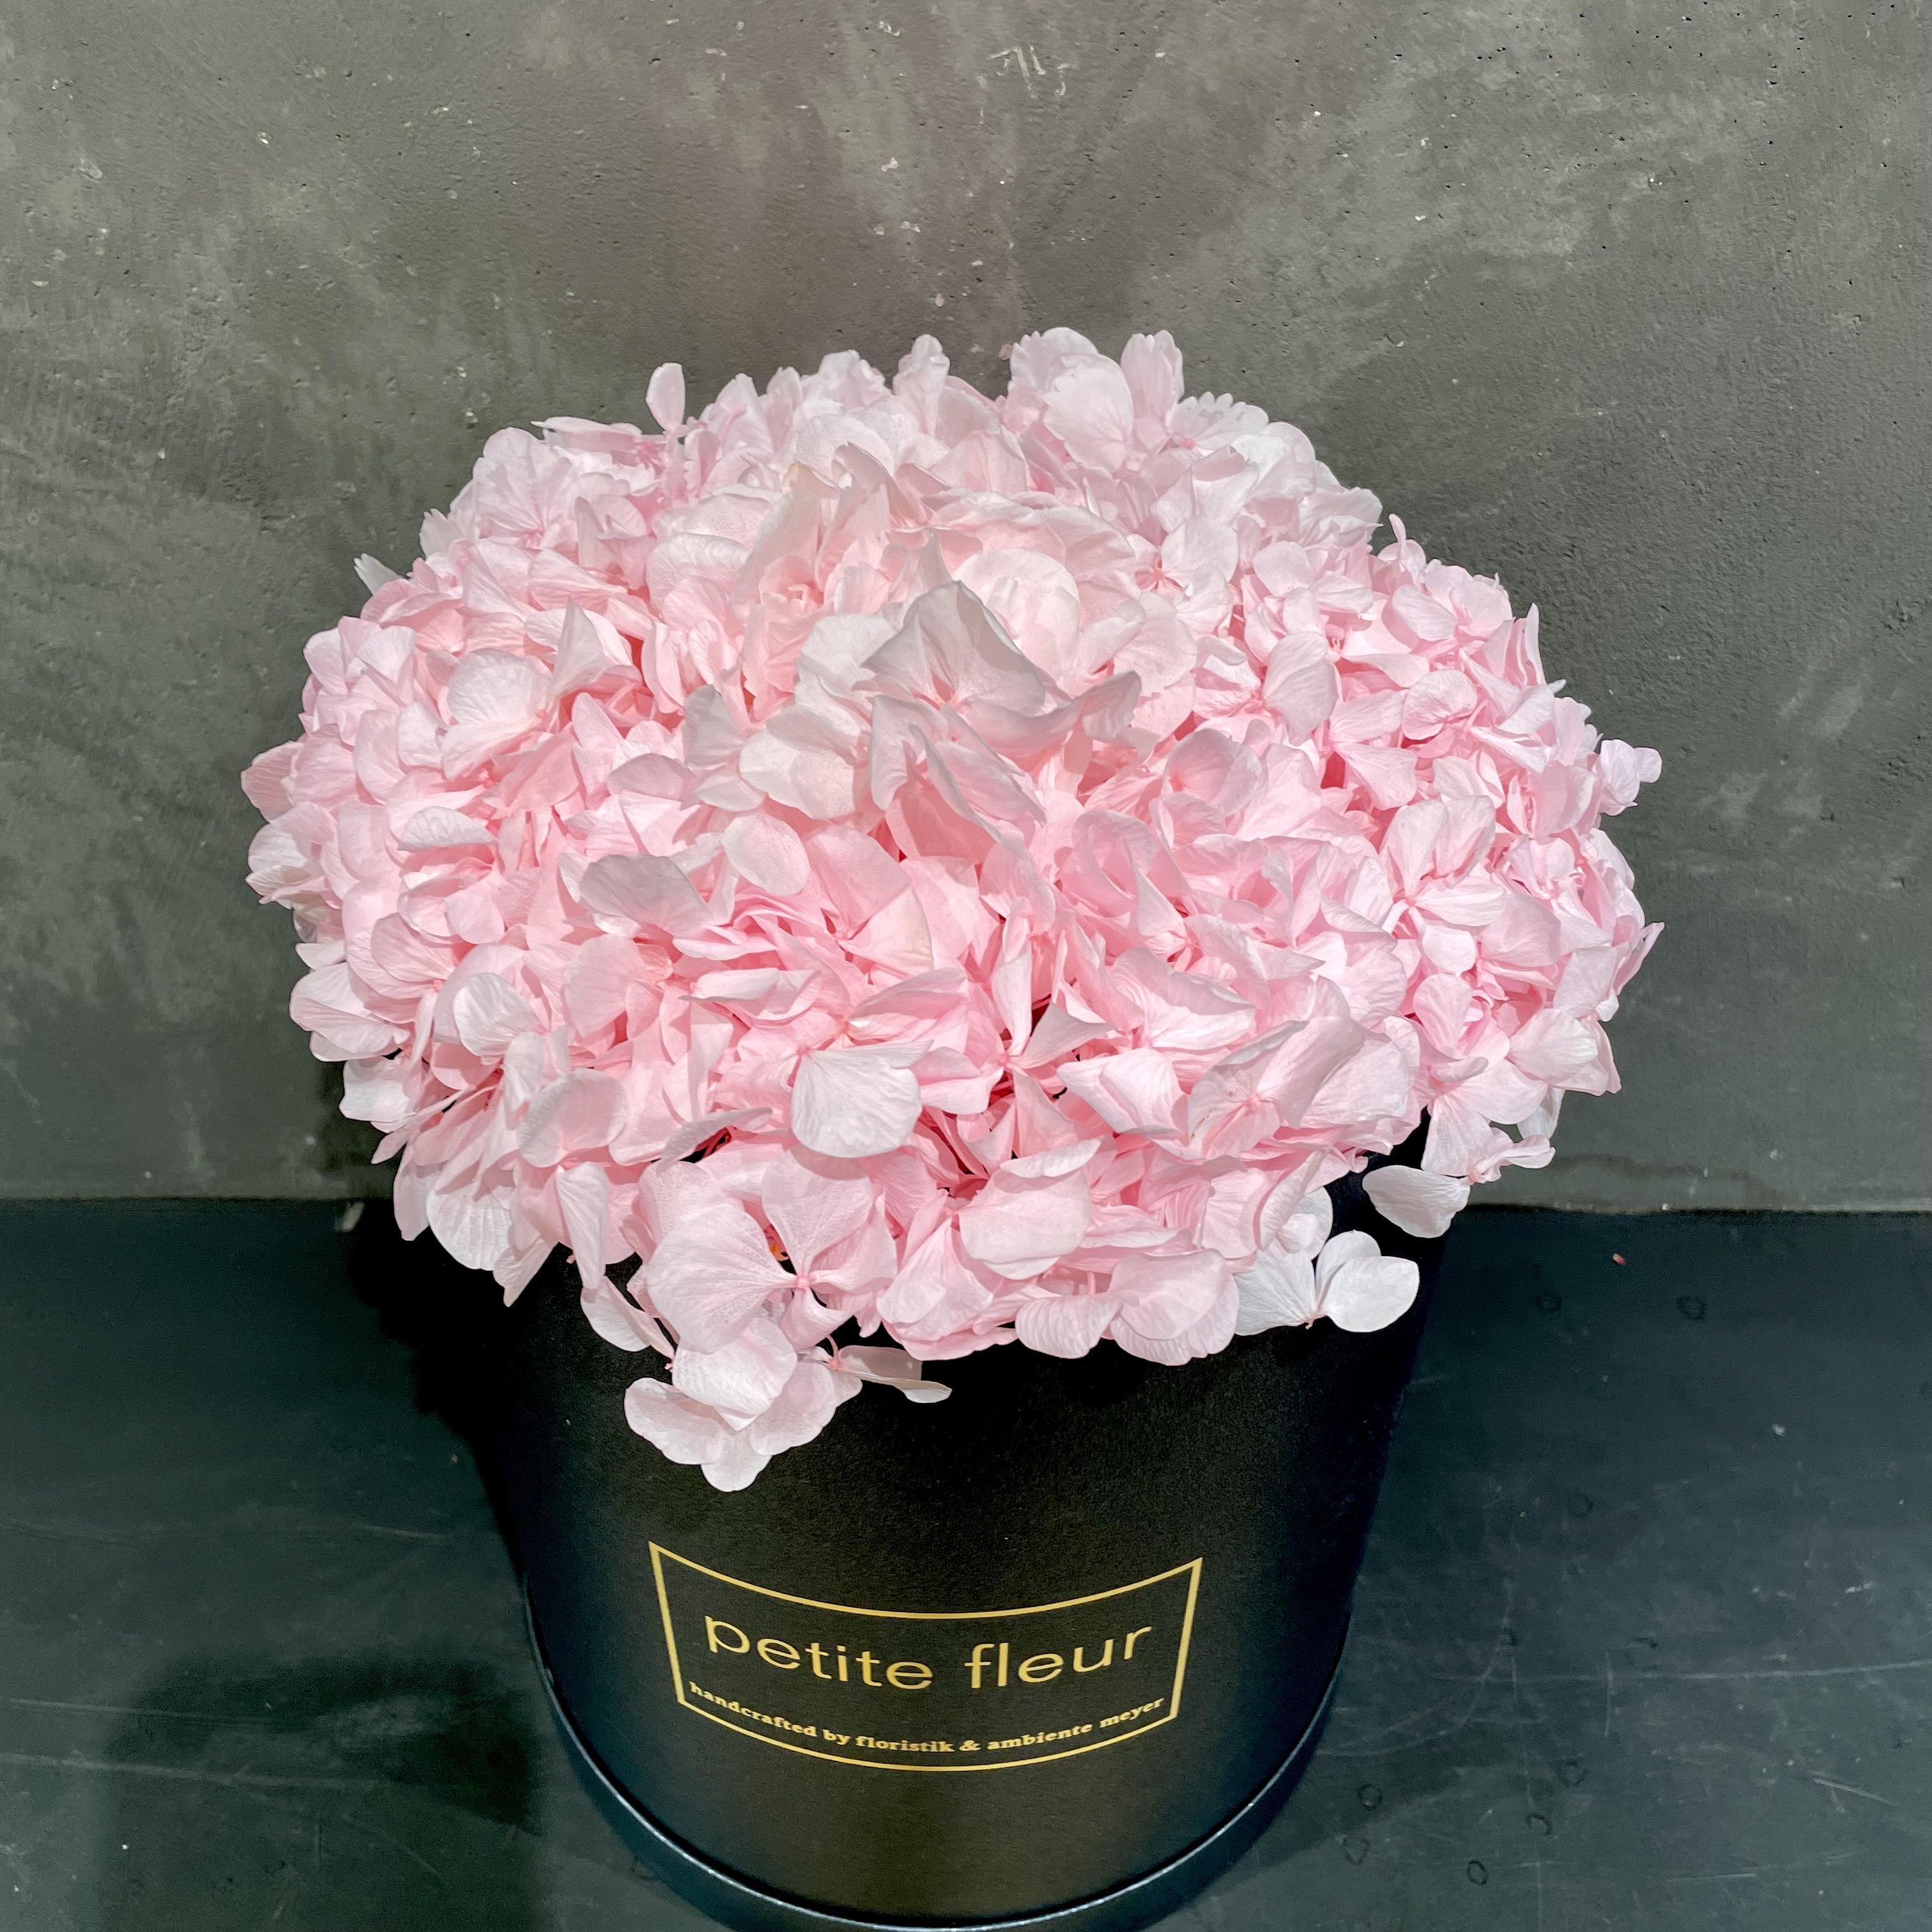 Petite Fleur Flowerbox XL Infinity Hortensien in black-satin Gold-Edition-Flowerbox 